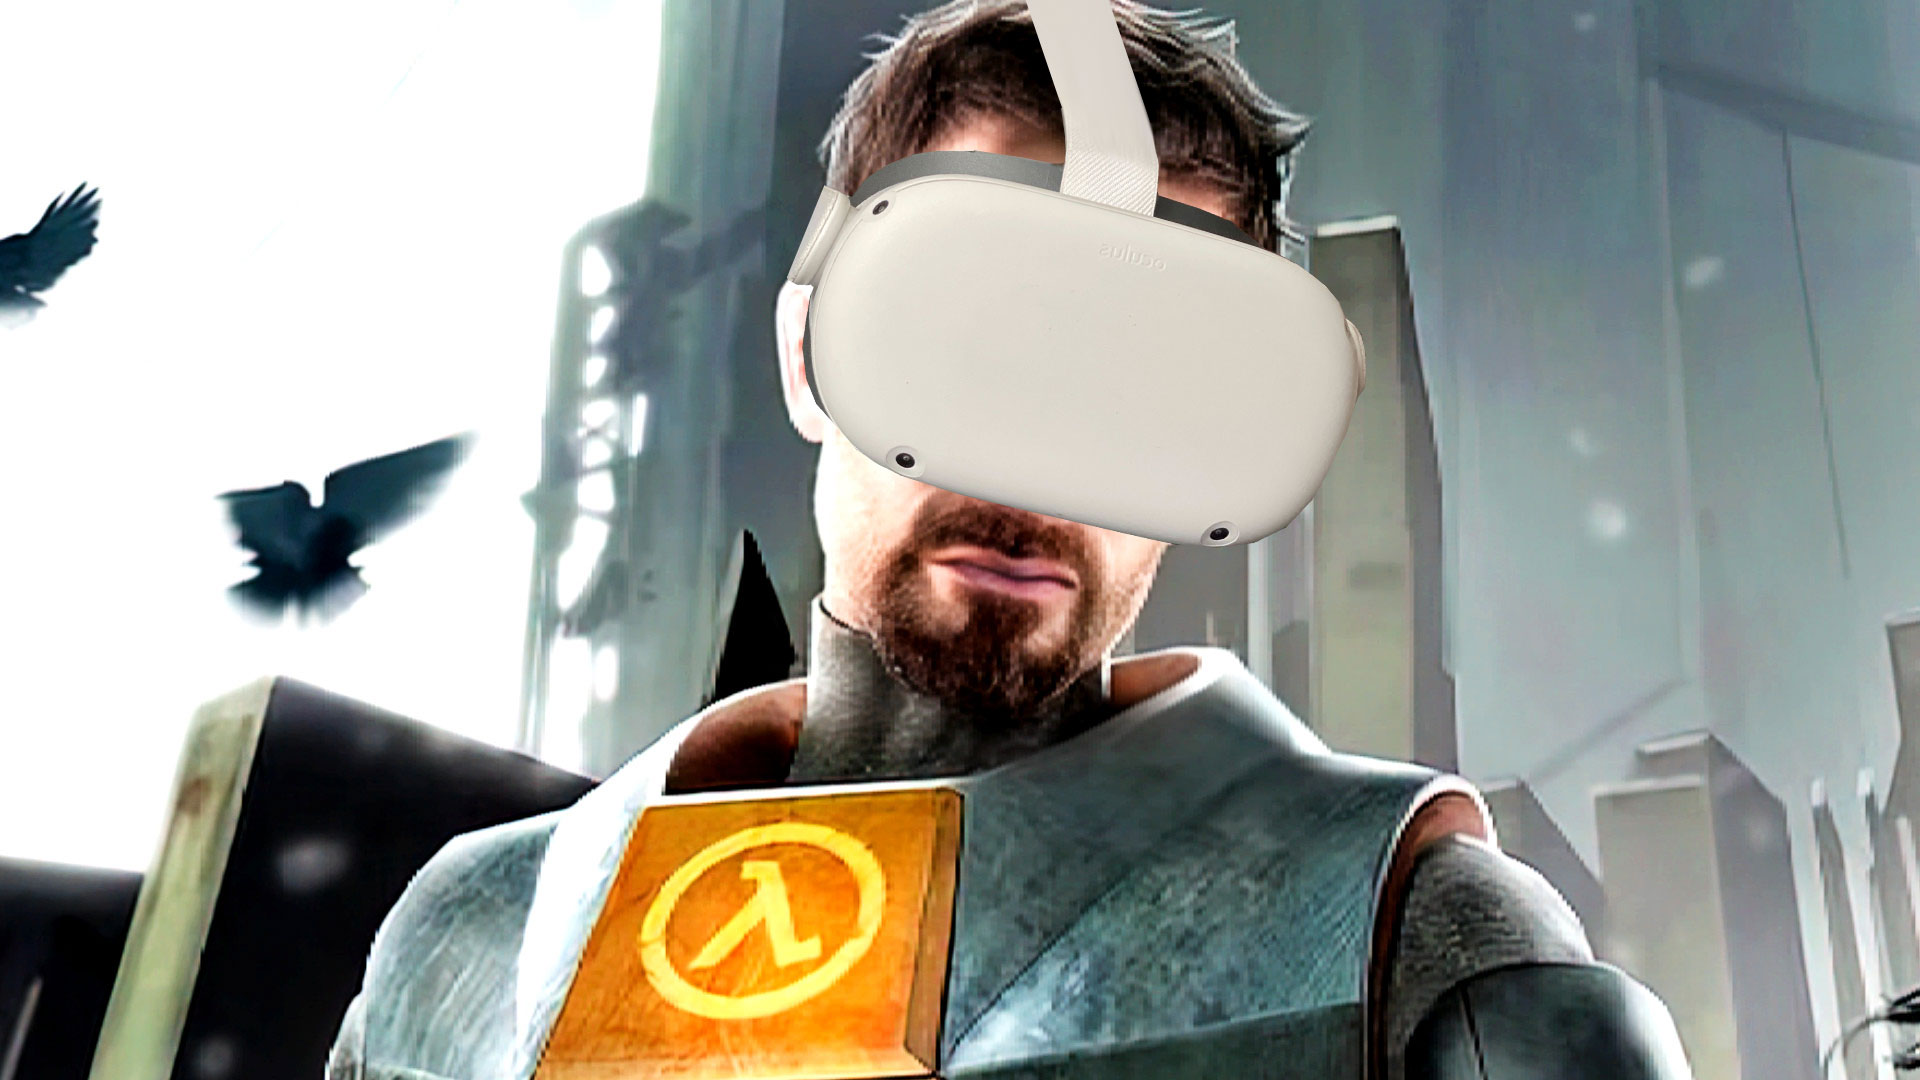 Half-Life 2 VR mod arrives on Steam ahead of September release date